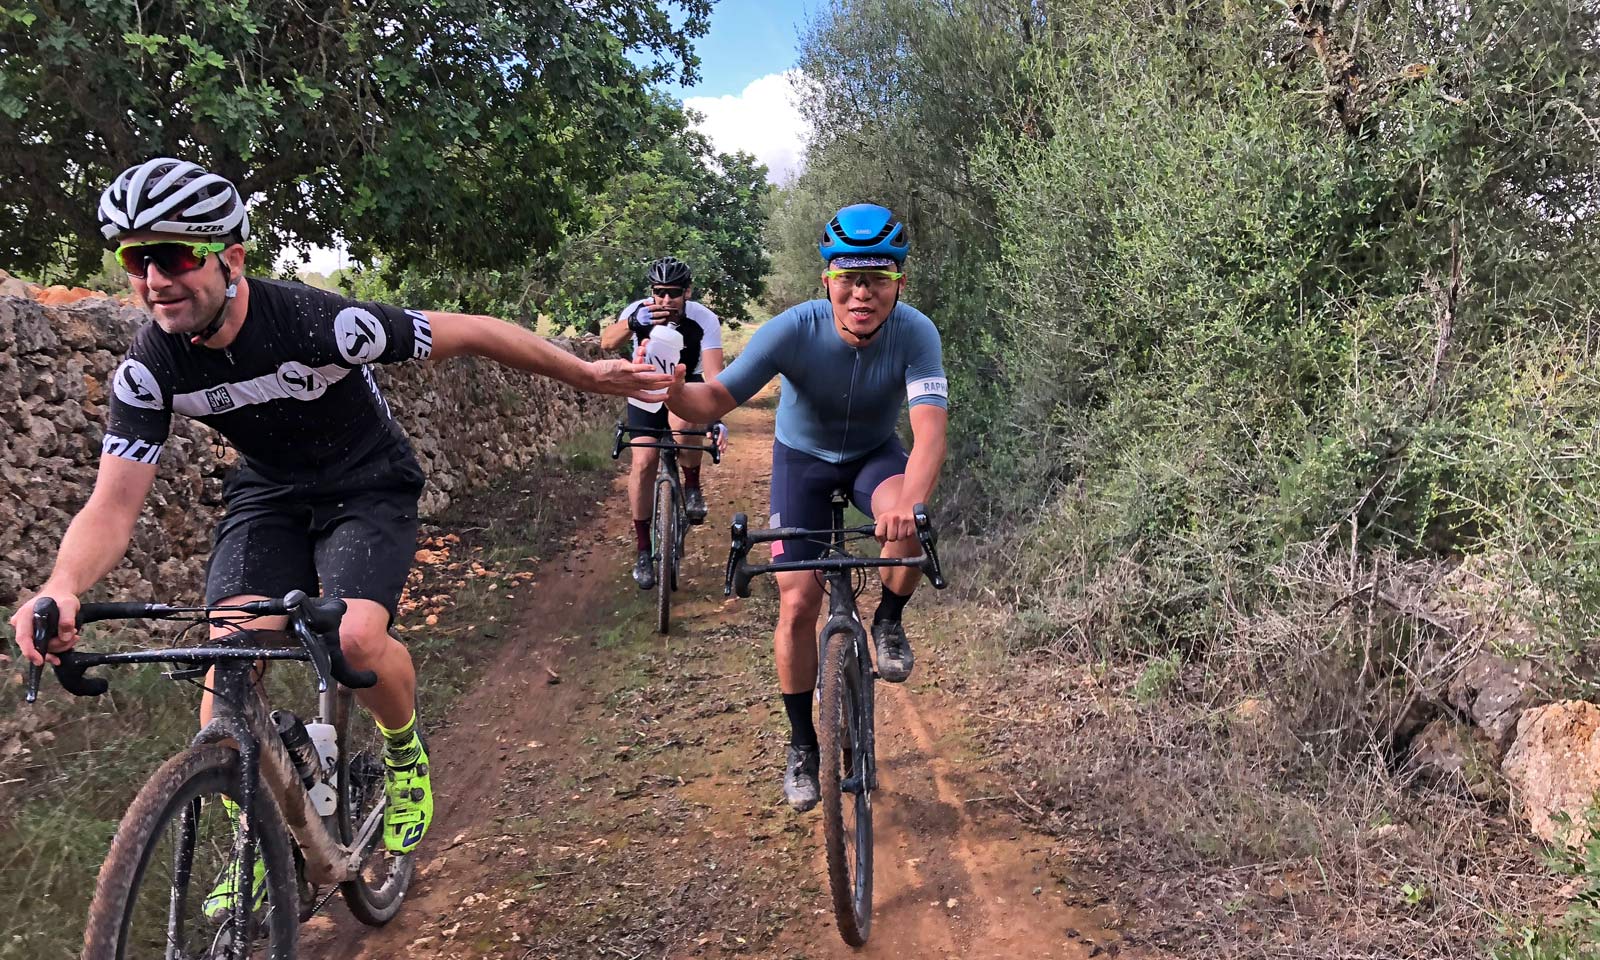 2019 Canyon Grail CF SLX carbon gravel race bike first annual Toros de Gravel gran fondo Mallorca